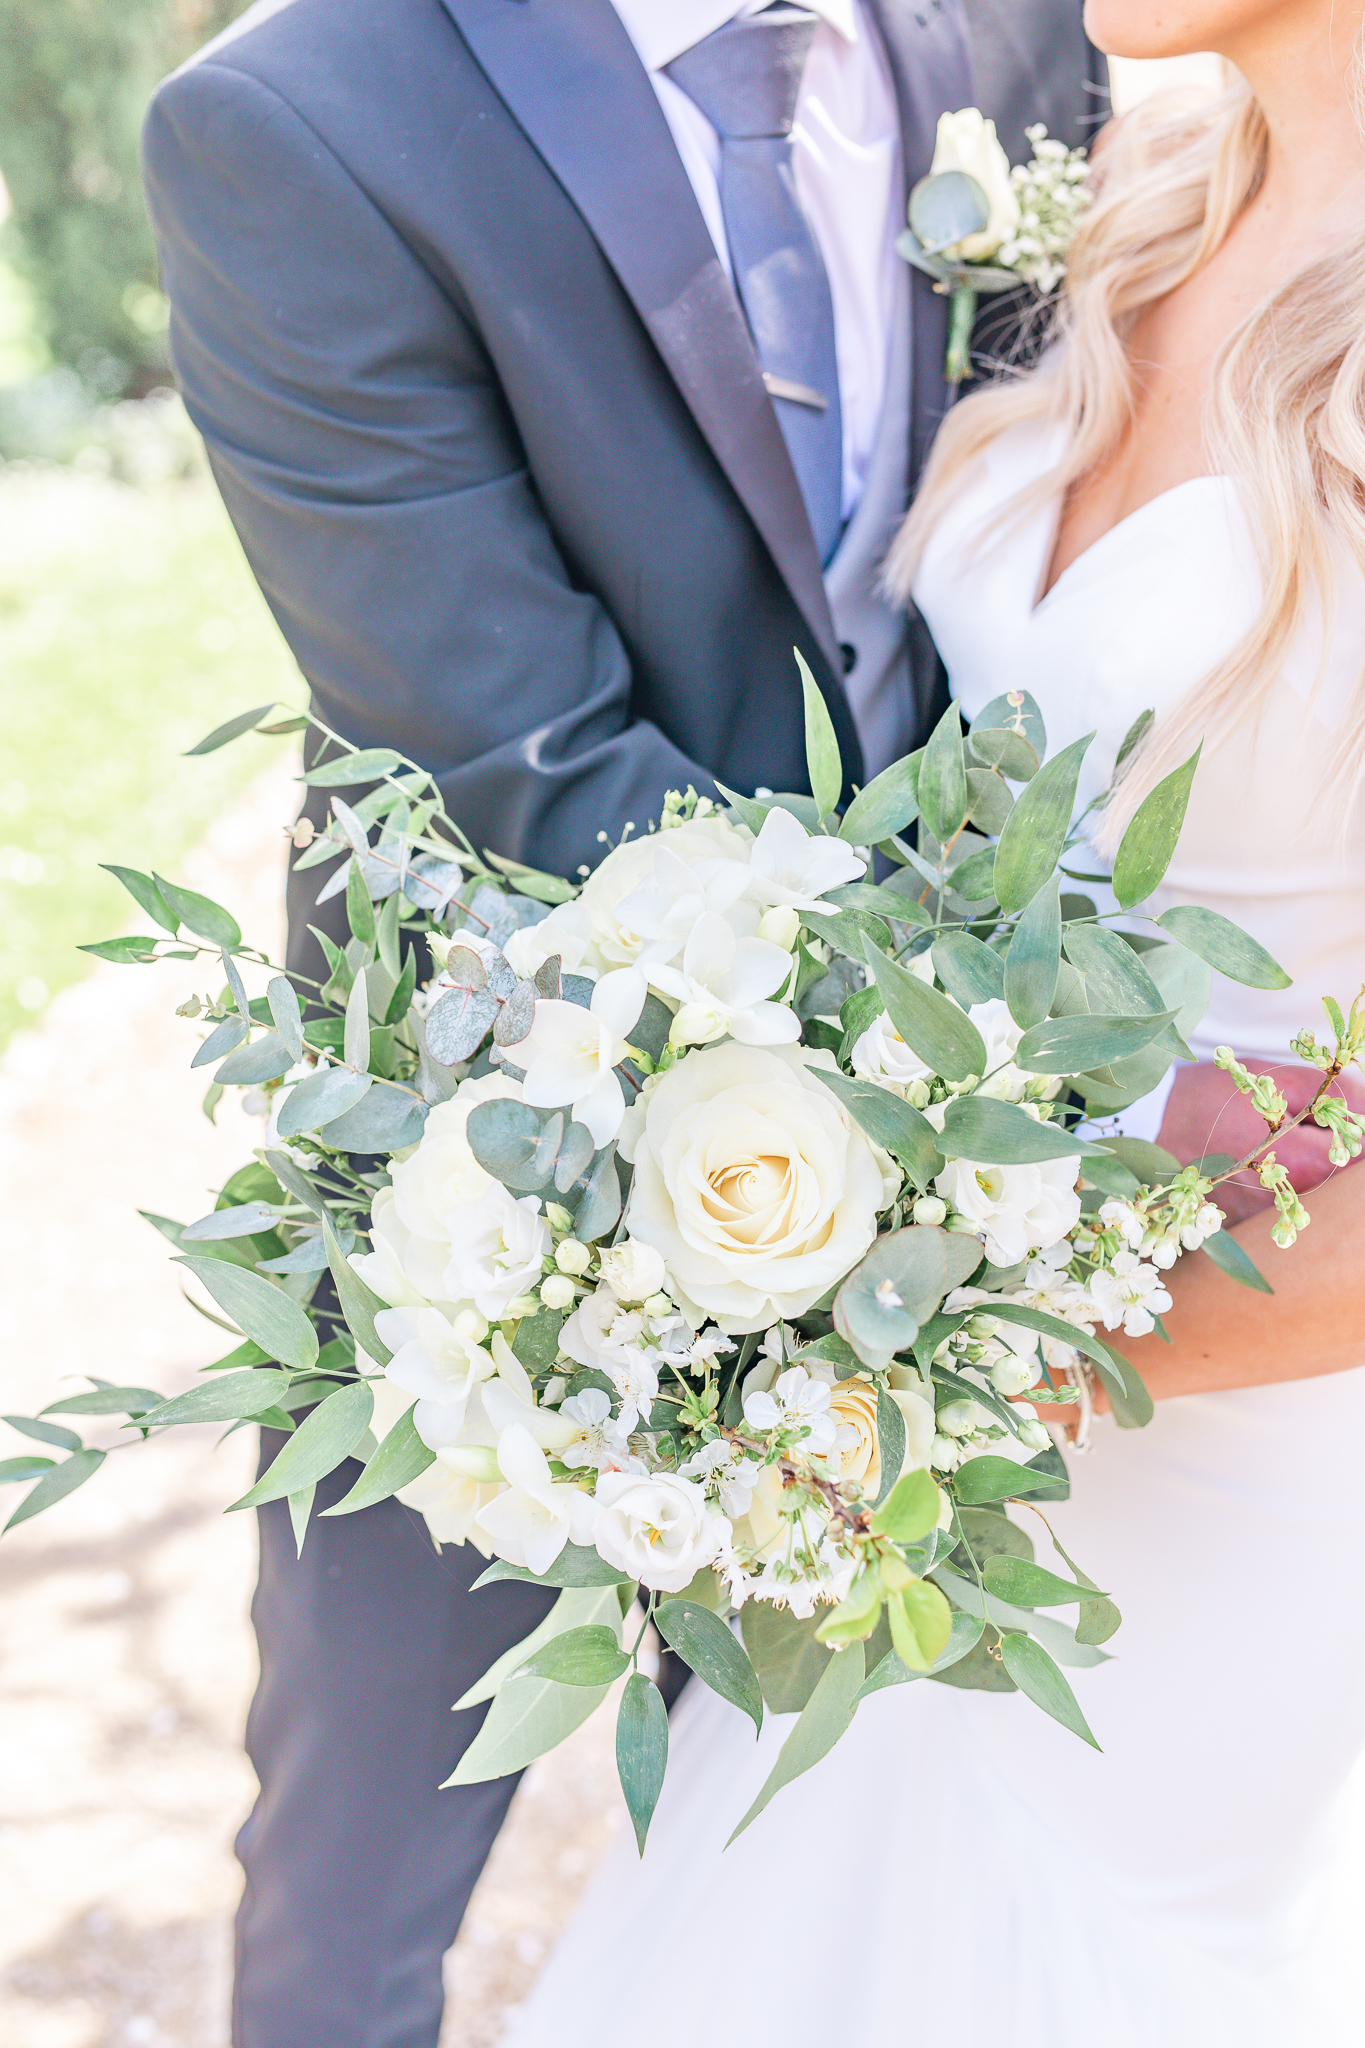 Beautiful white rose bridal bouquet